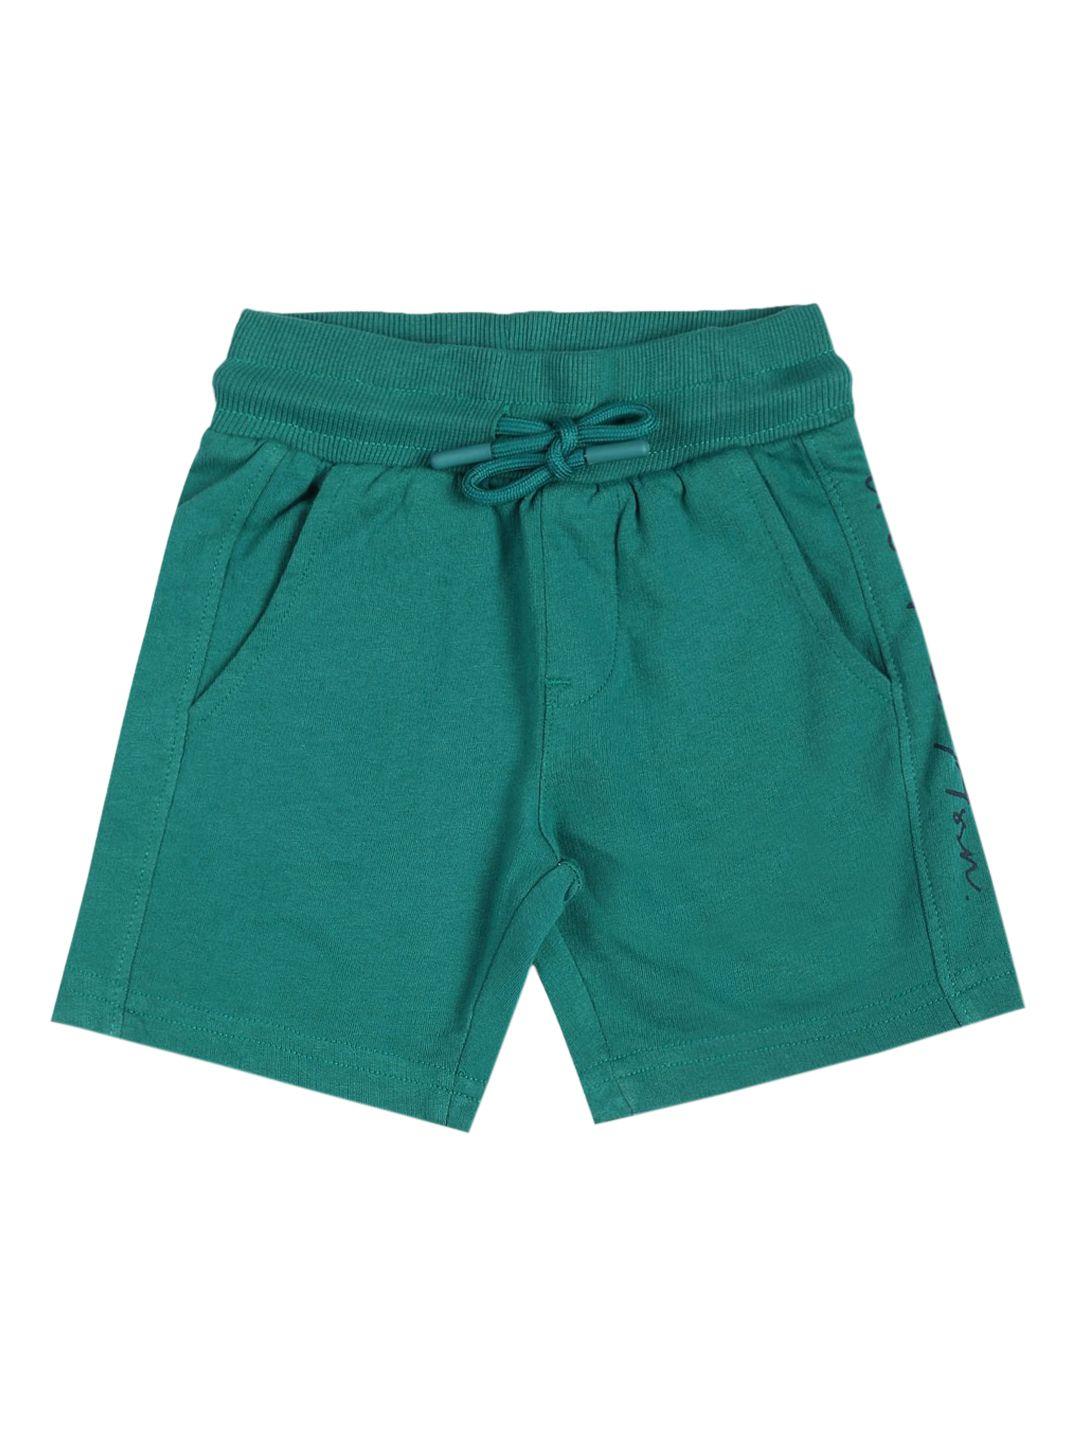 u s polo assn kids boys green shorts